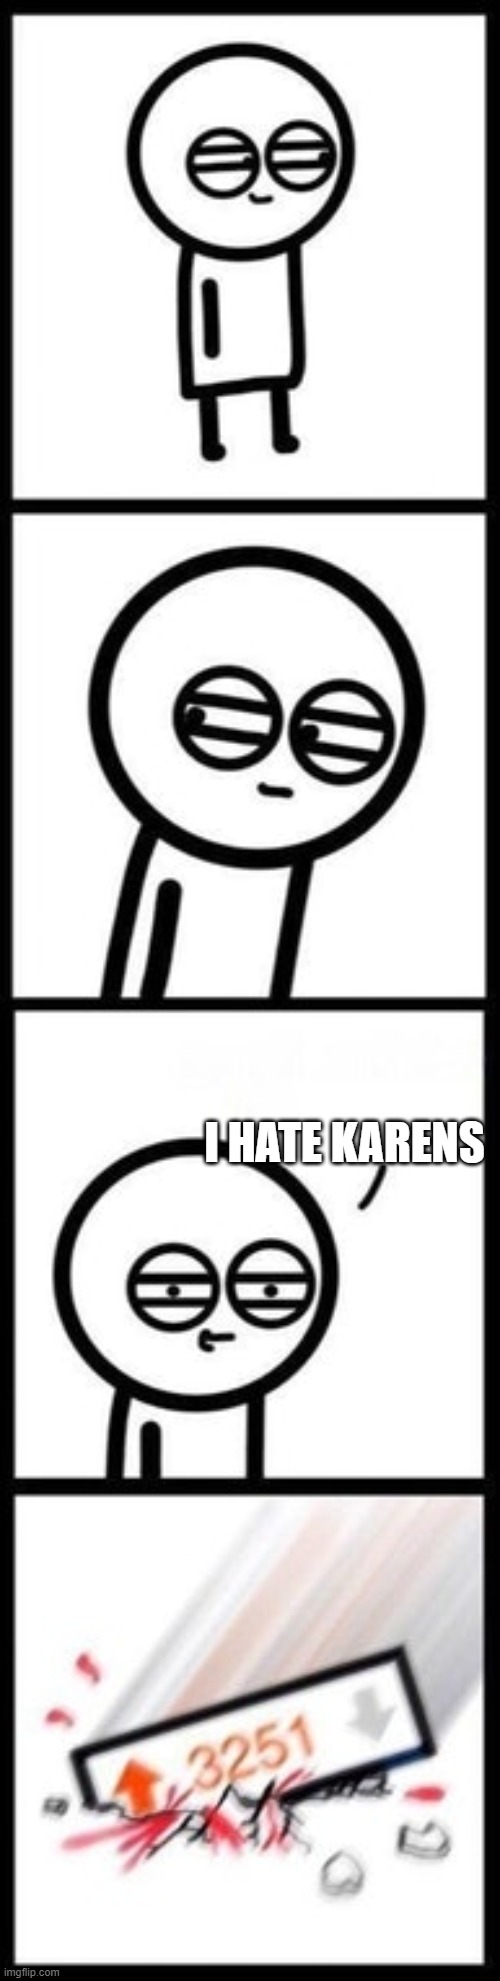 karen!!! | I HATE KARENS | image tagged in 3251 upvotes | made w/ Imgflip meme maker